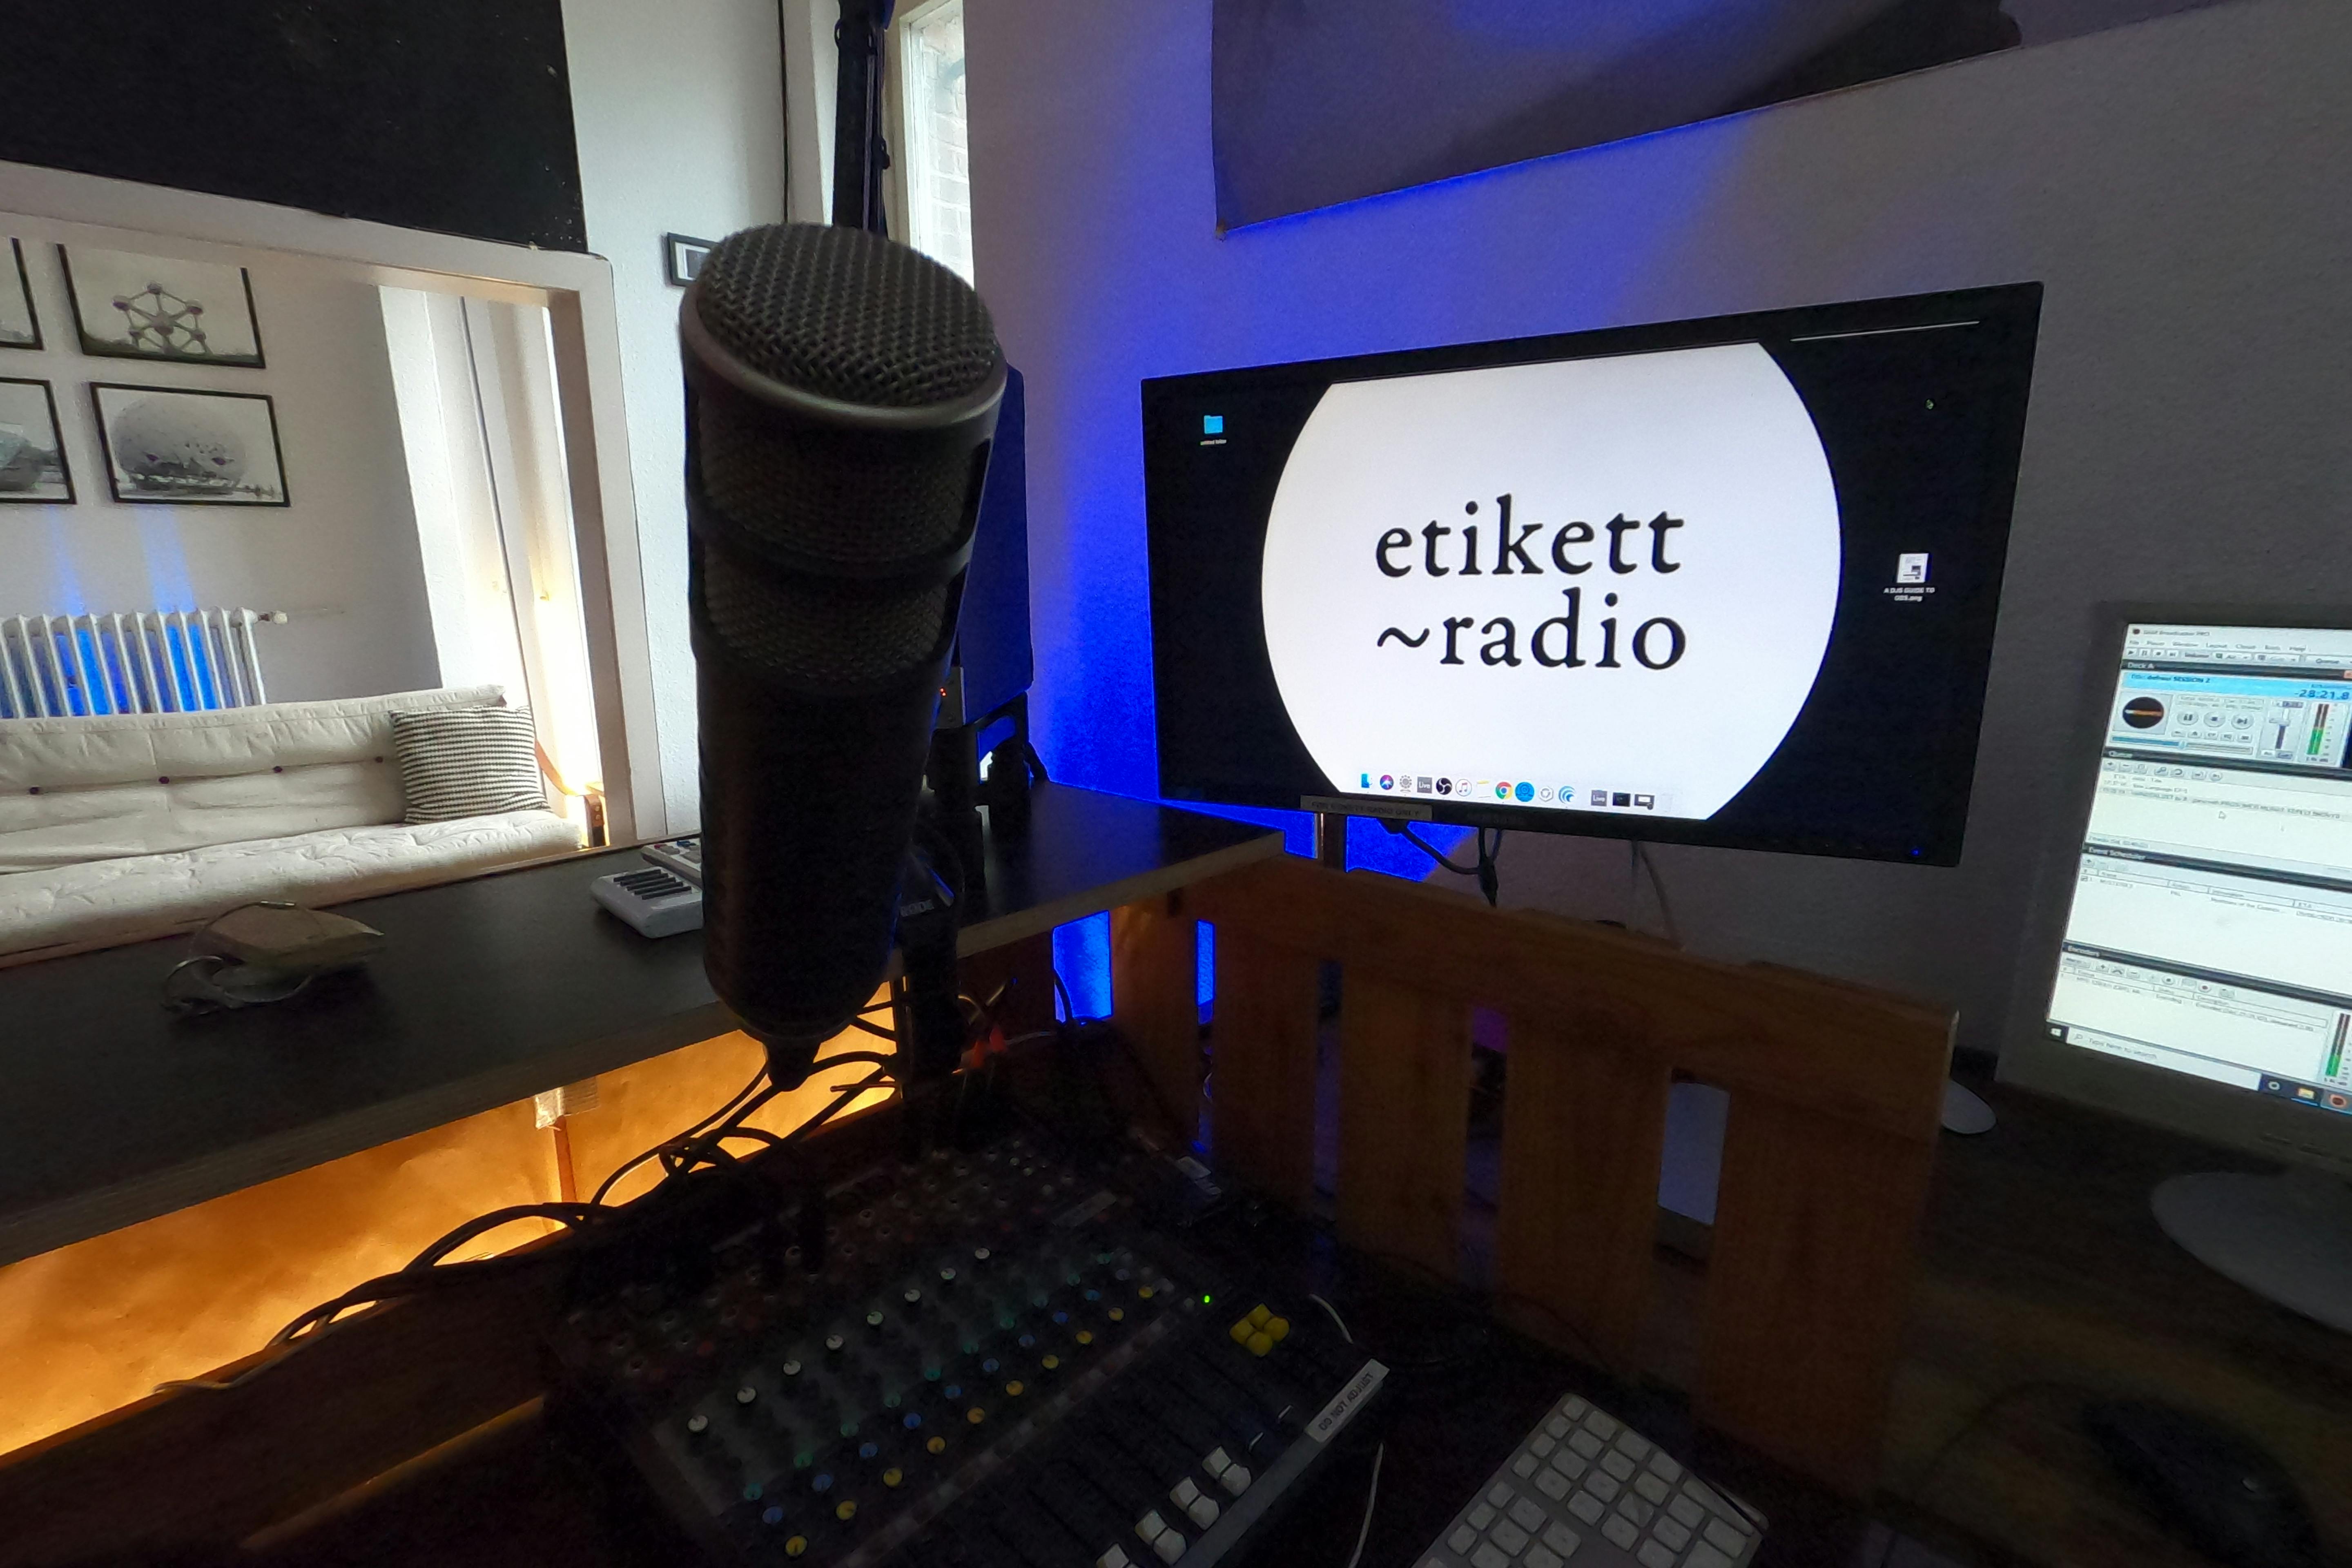 Etikett Radio equipment at Catalyst Berlin